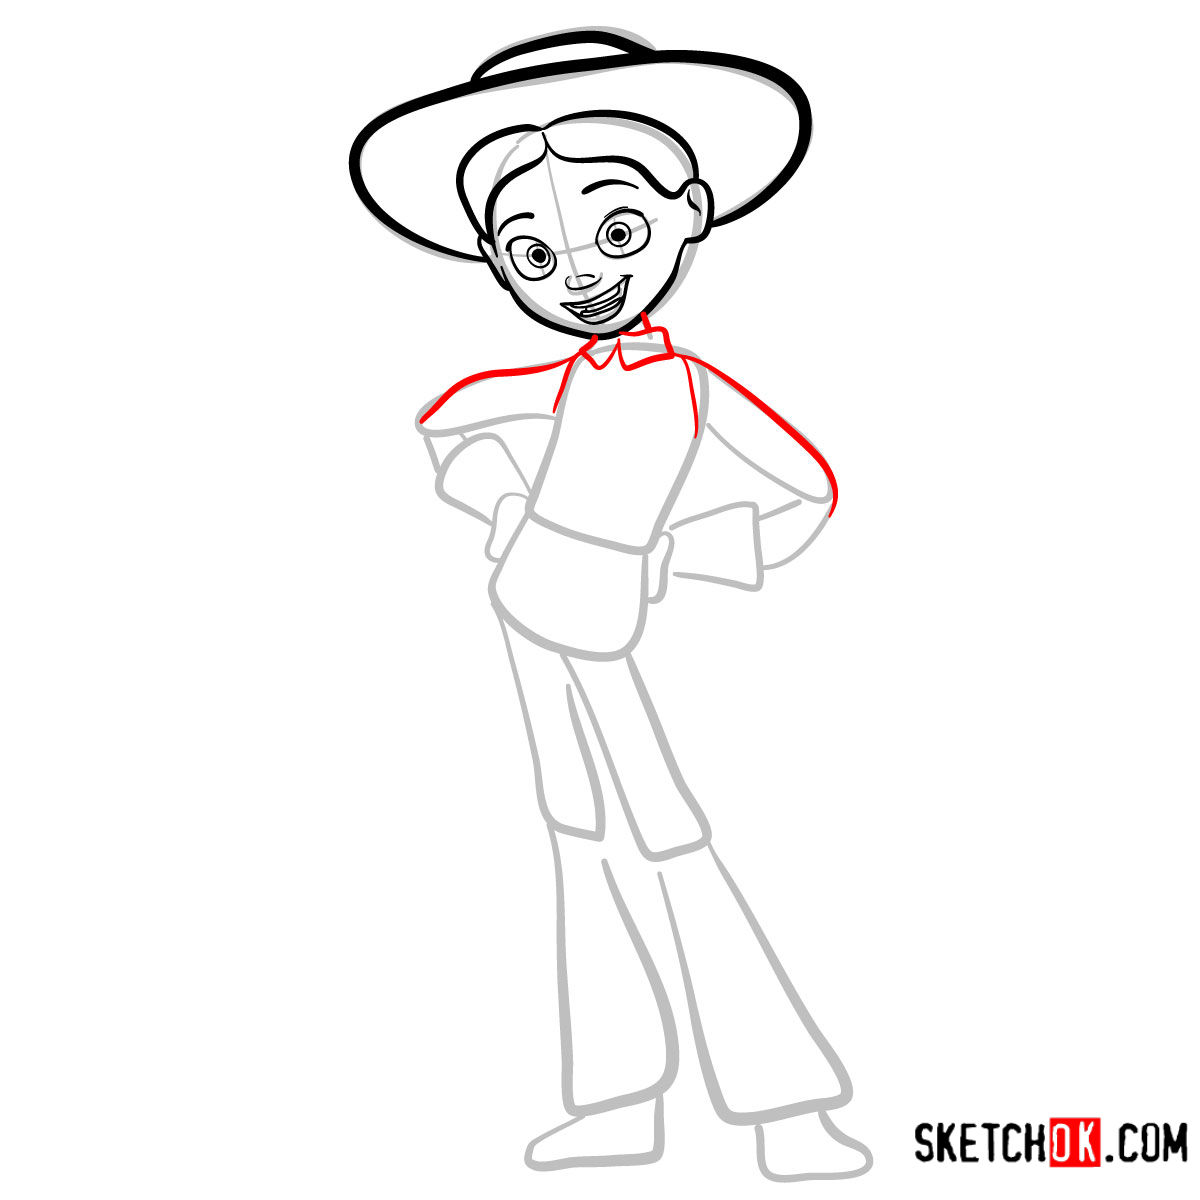 How to draw Jessie from Toy Story 2 - step 06